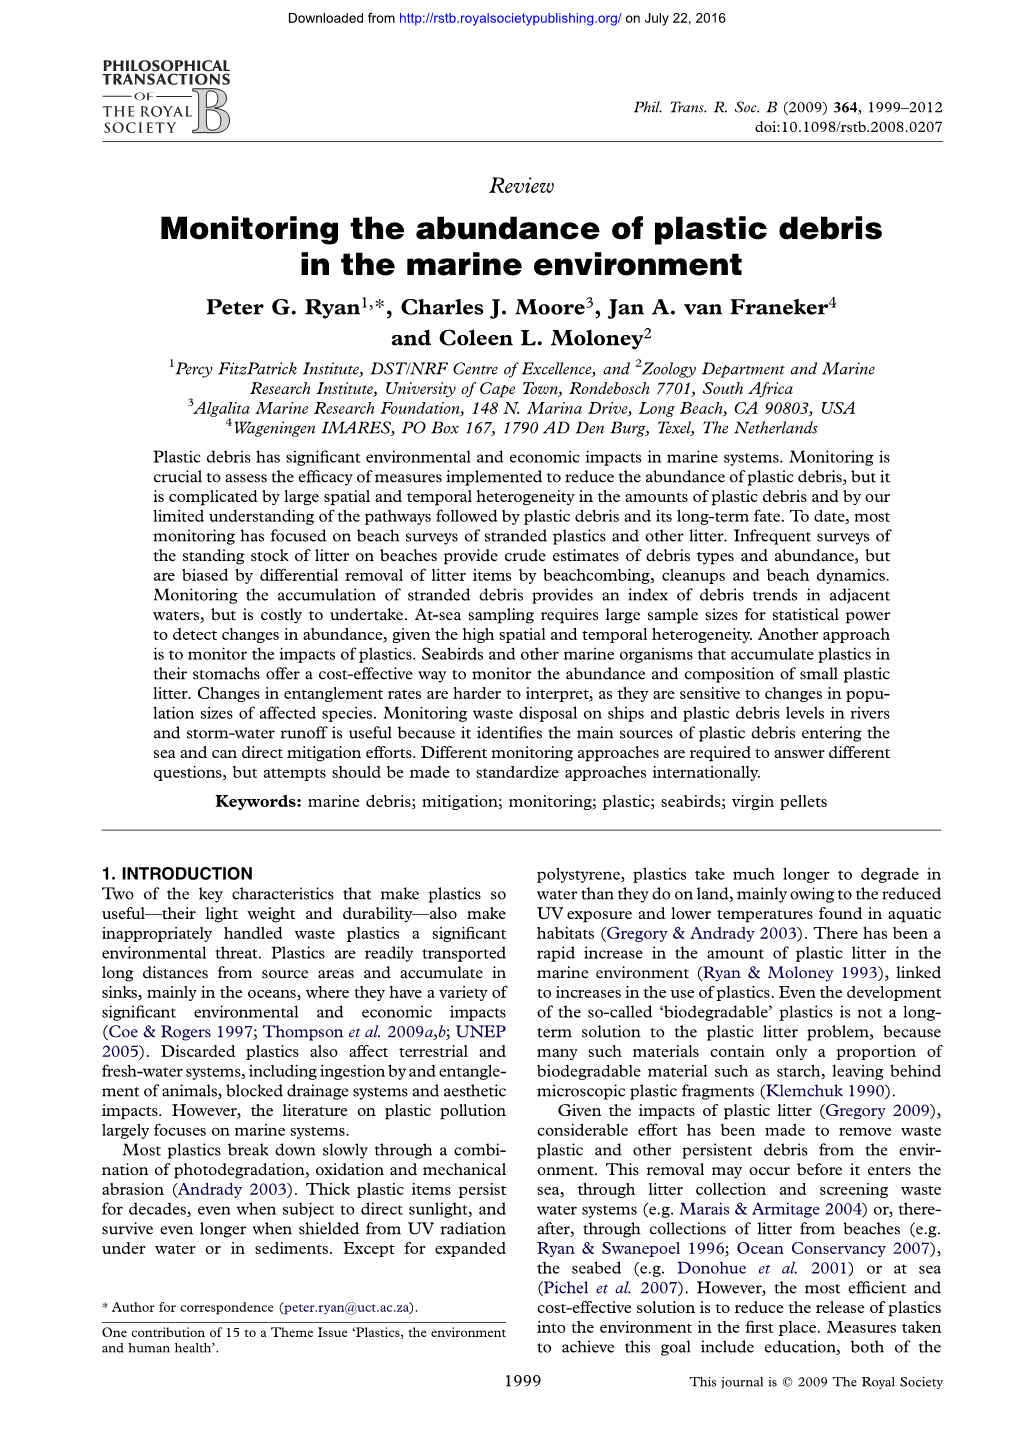 Monitoring the Abundance of Plastic Debris in the Marine Environment Peter G